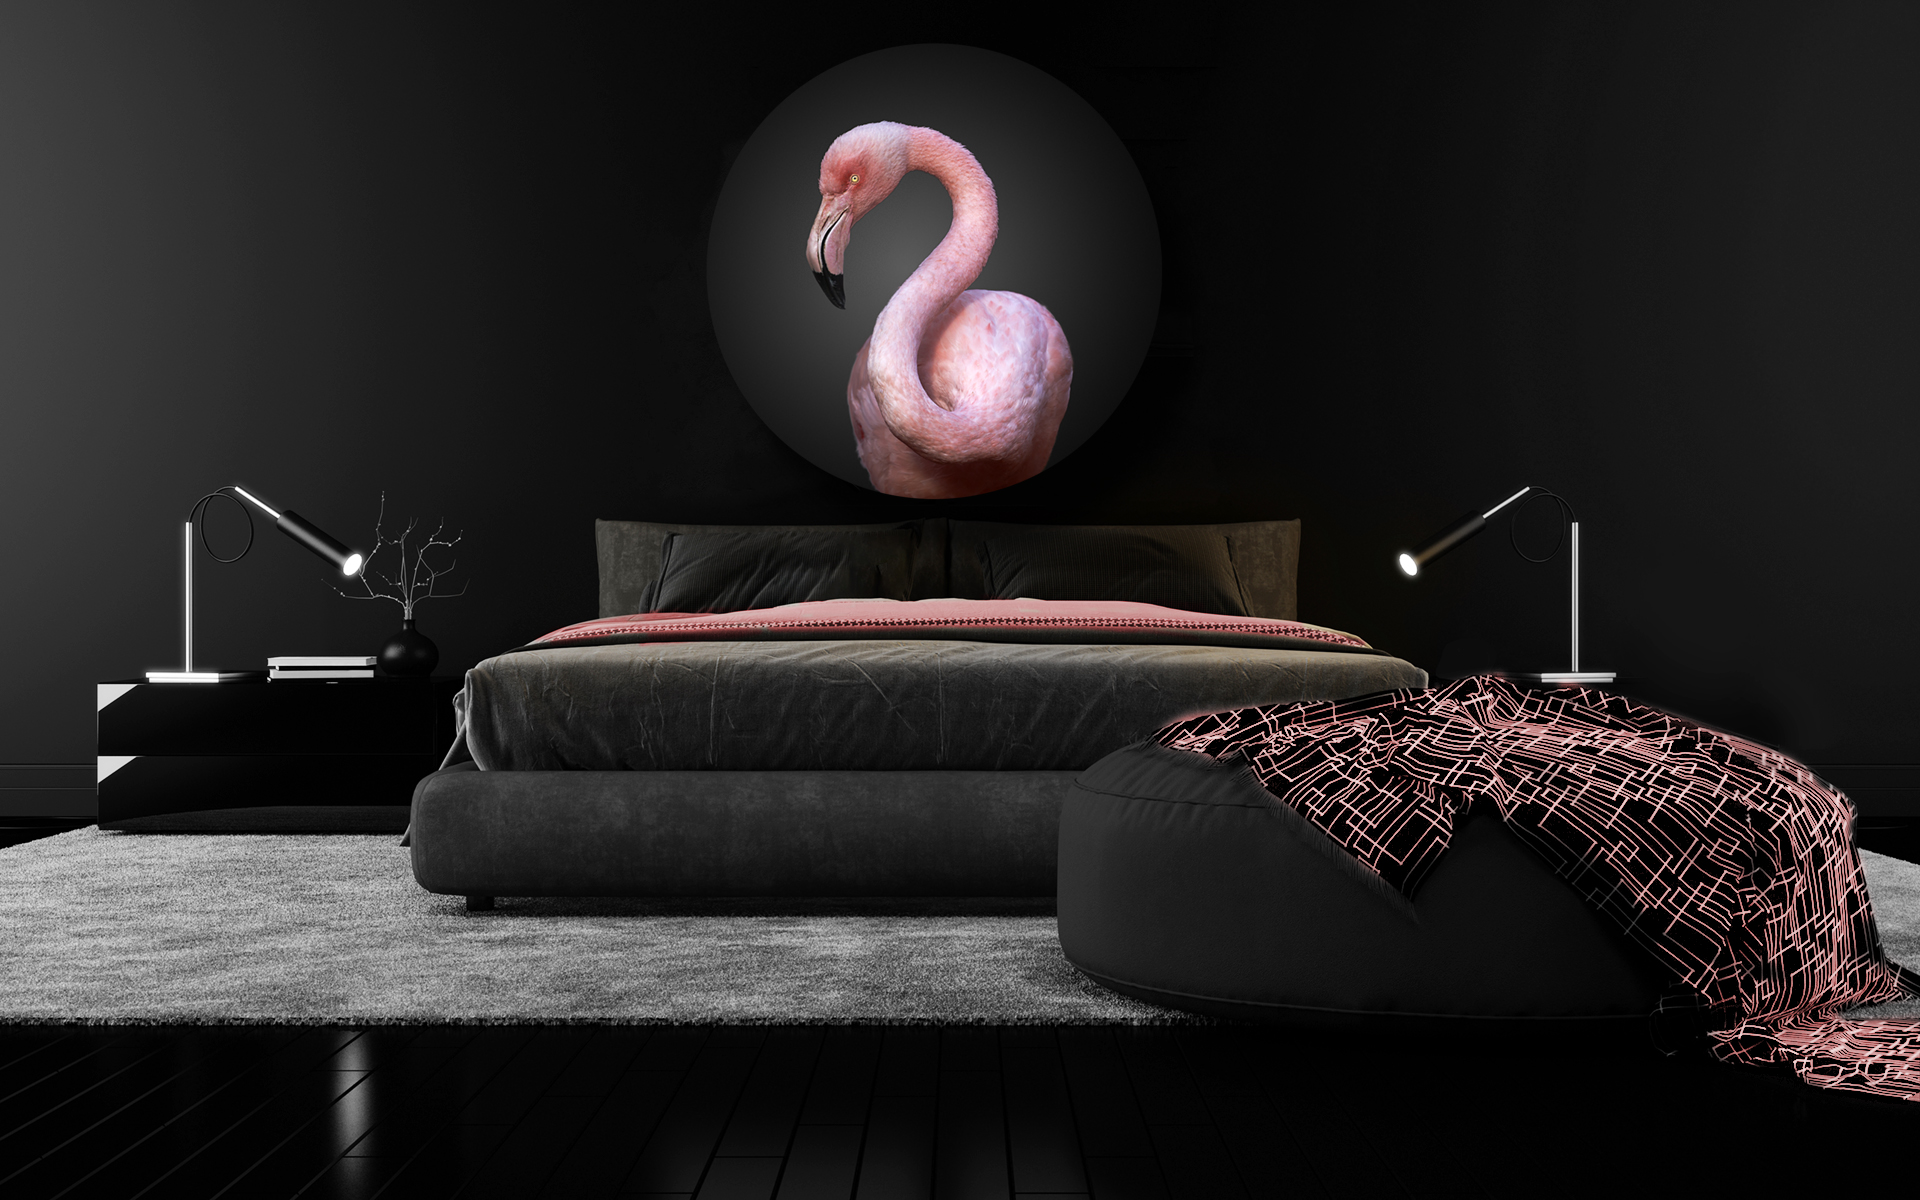 Flamingo portrait in circle in bedroom